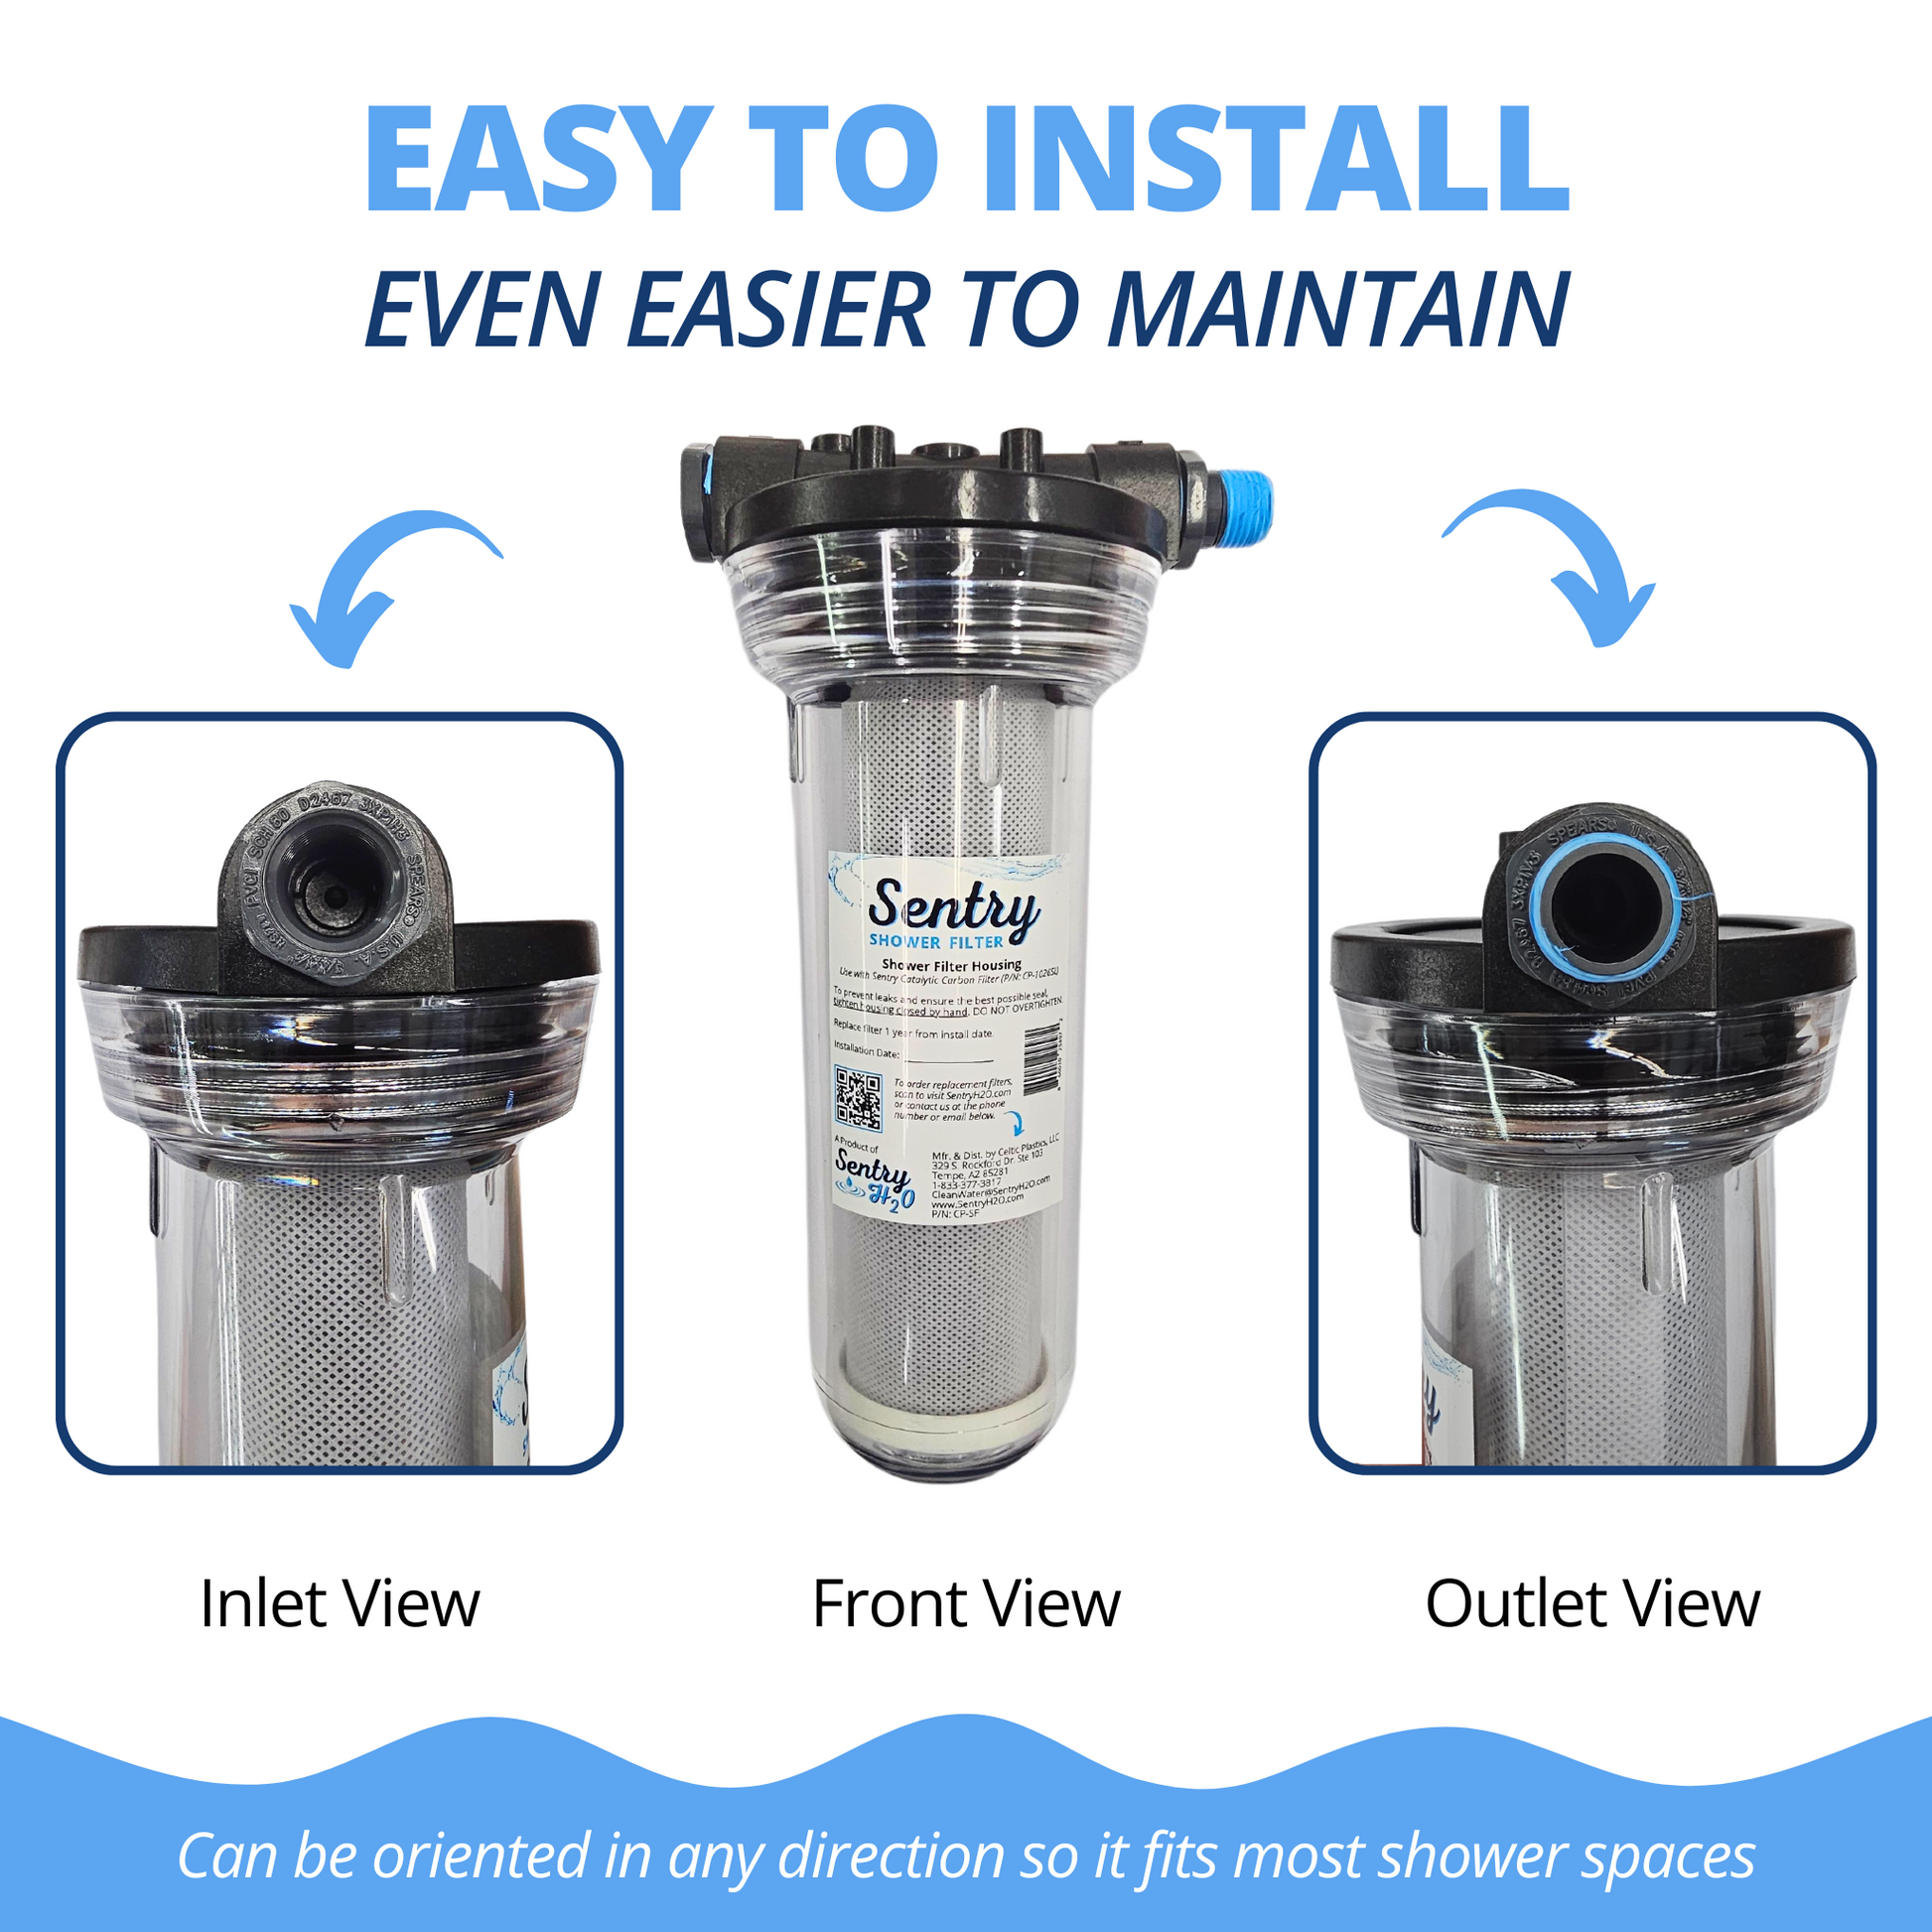 Easy to install Sentry shower filter